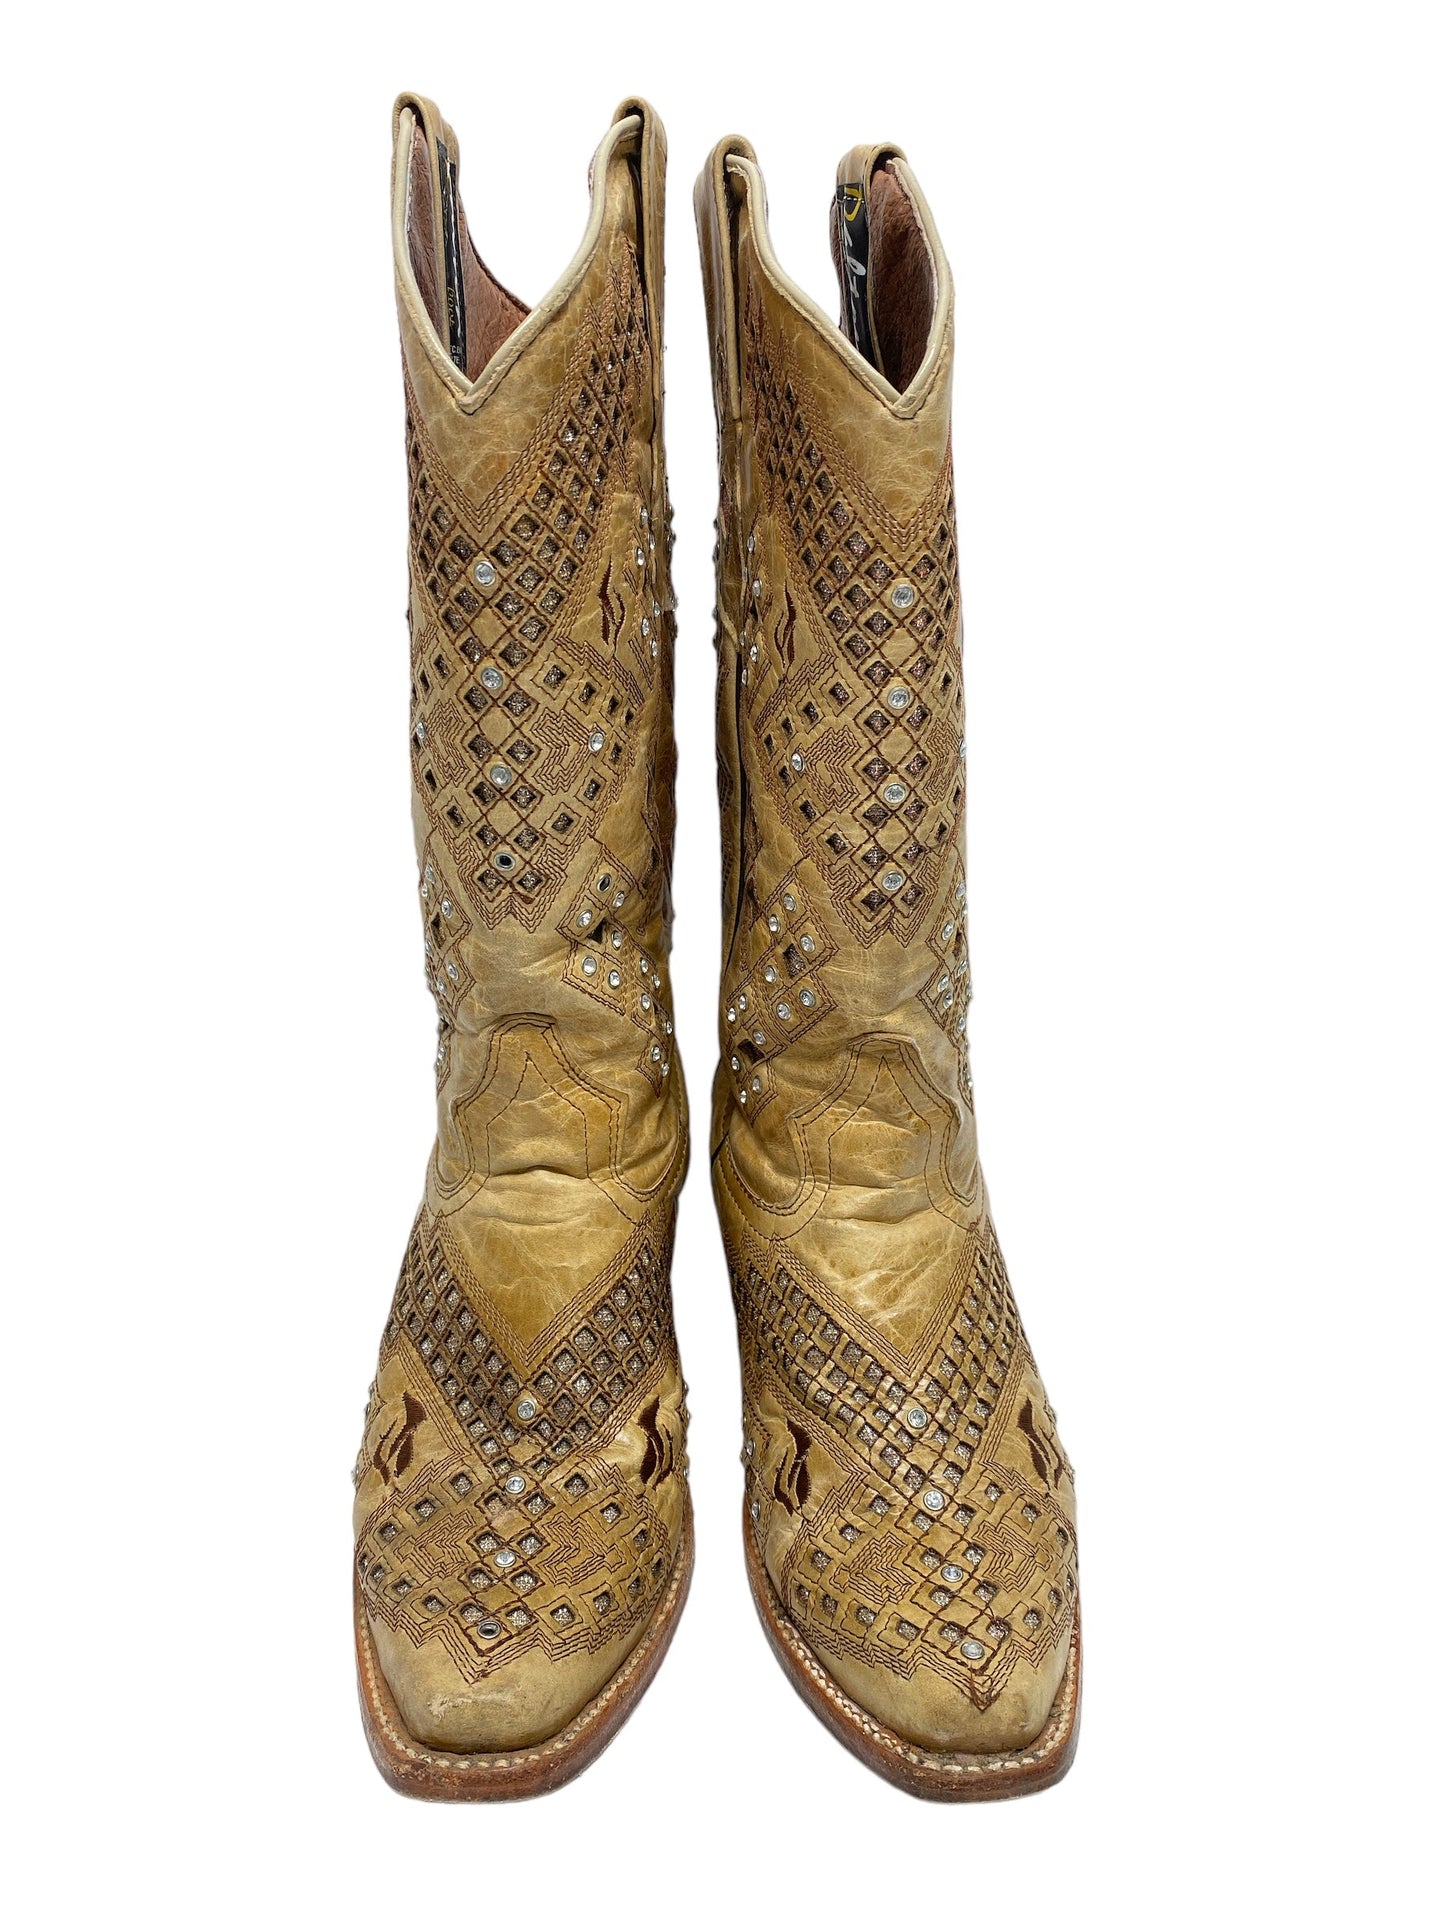 Boots Western By Dalton Size: 7